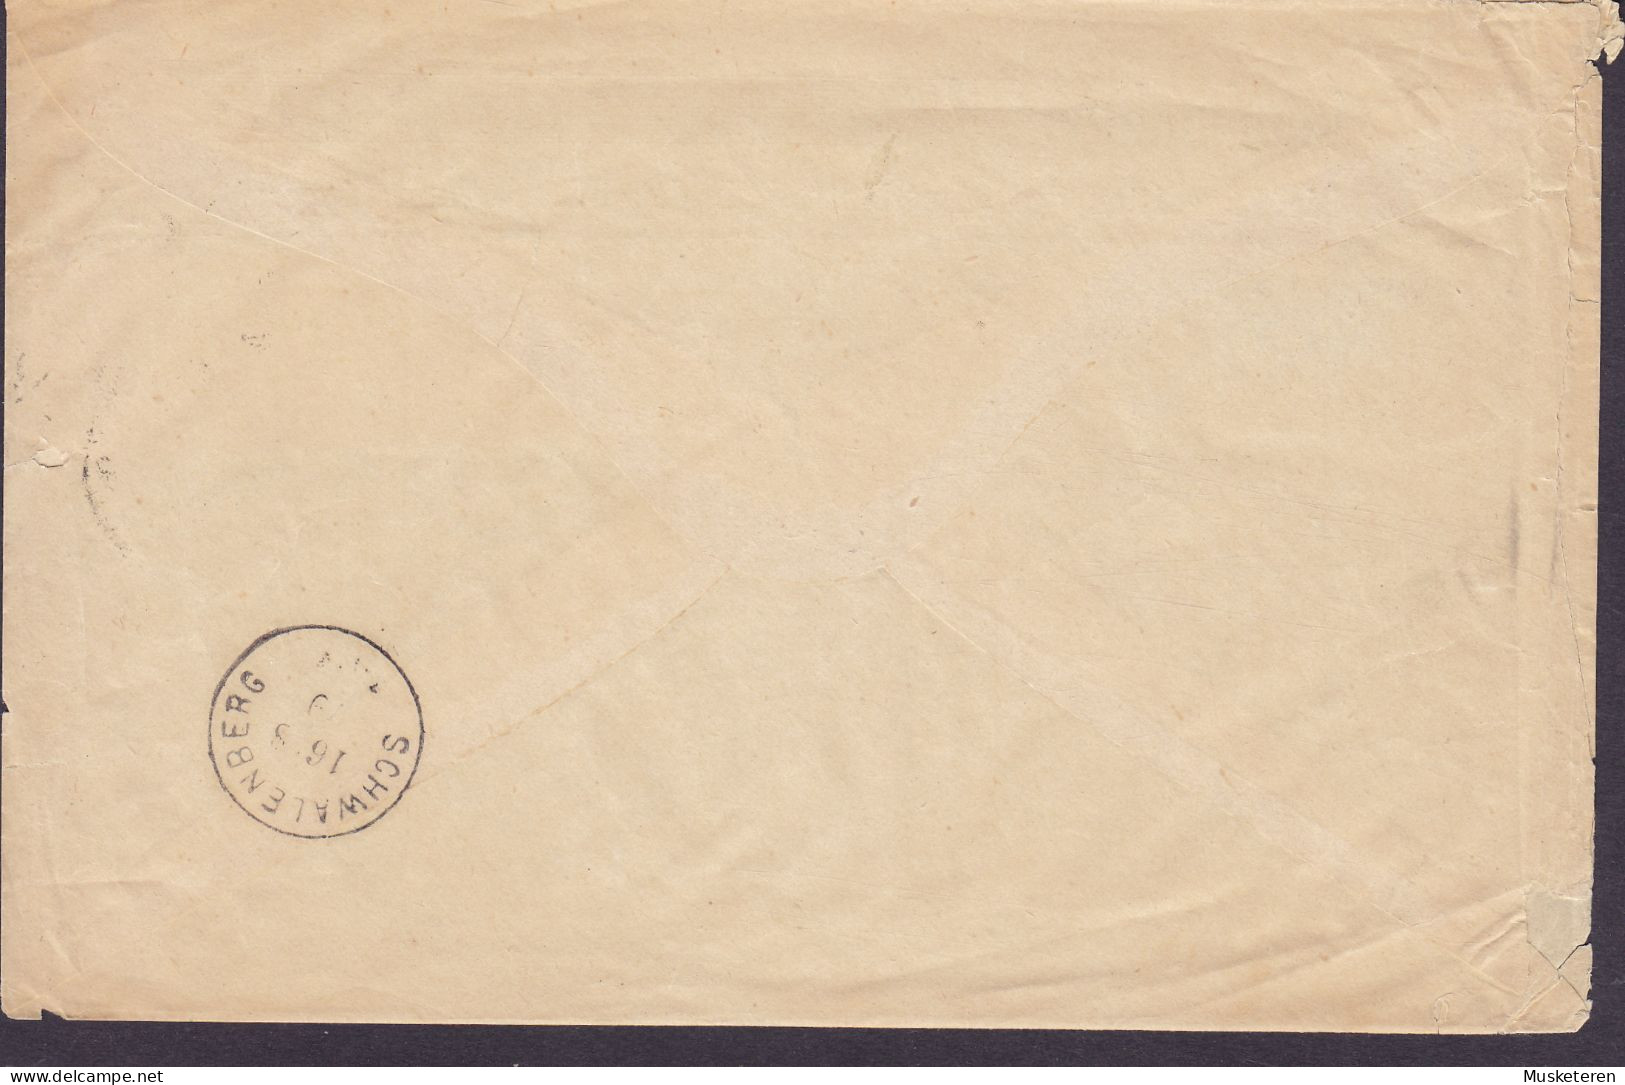 Reichspost NACHNAHME Label AMTSBLATTES FÜRSTENTHUM LIPPE, DETMOLD 1879 Cover Brief Postnachnahme 3-Stripe Pf(e). - Covers & Documents